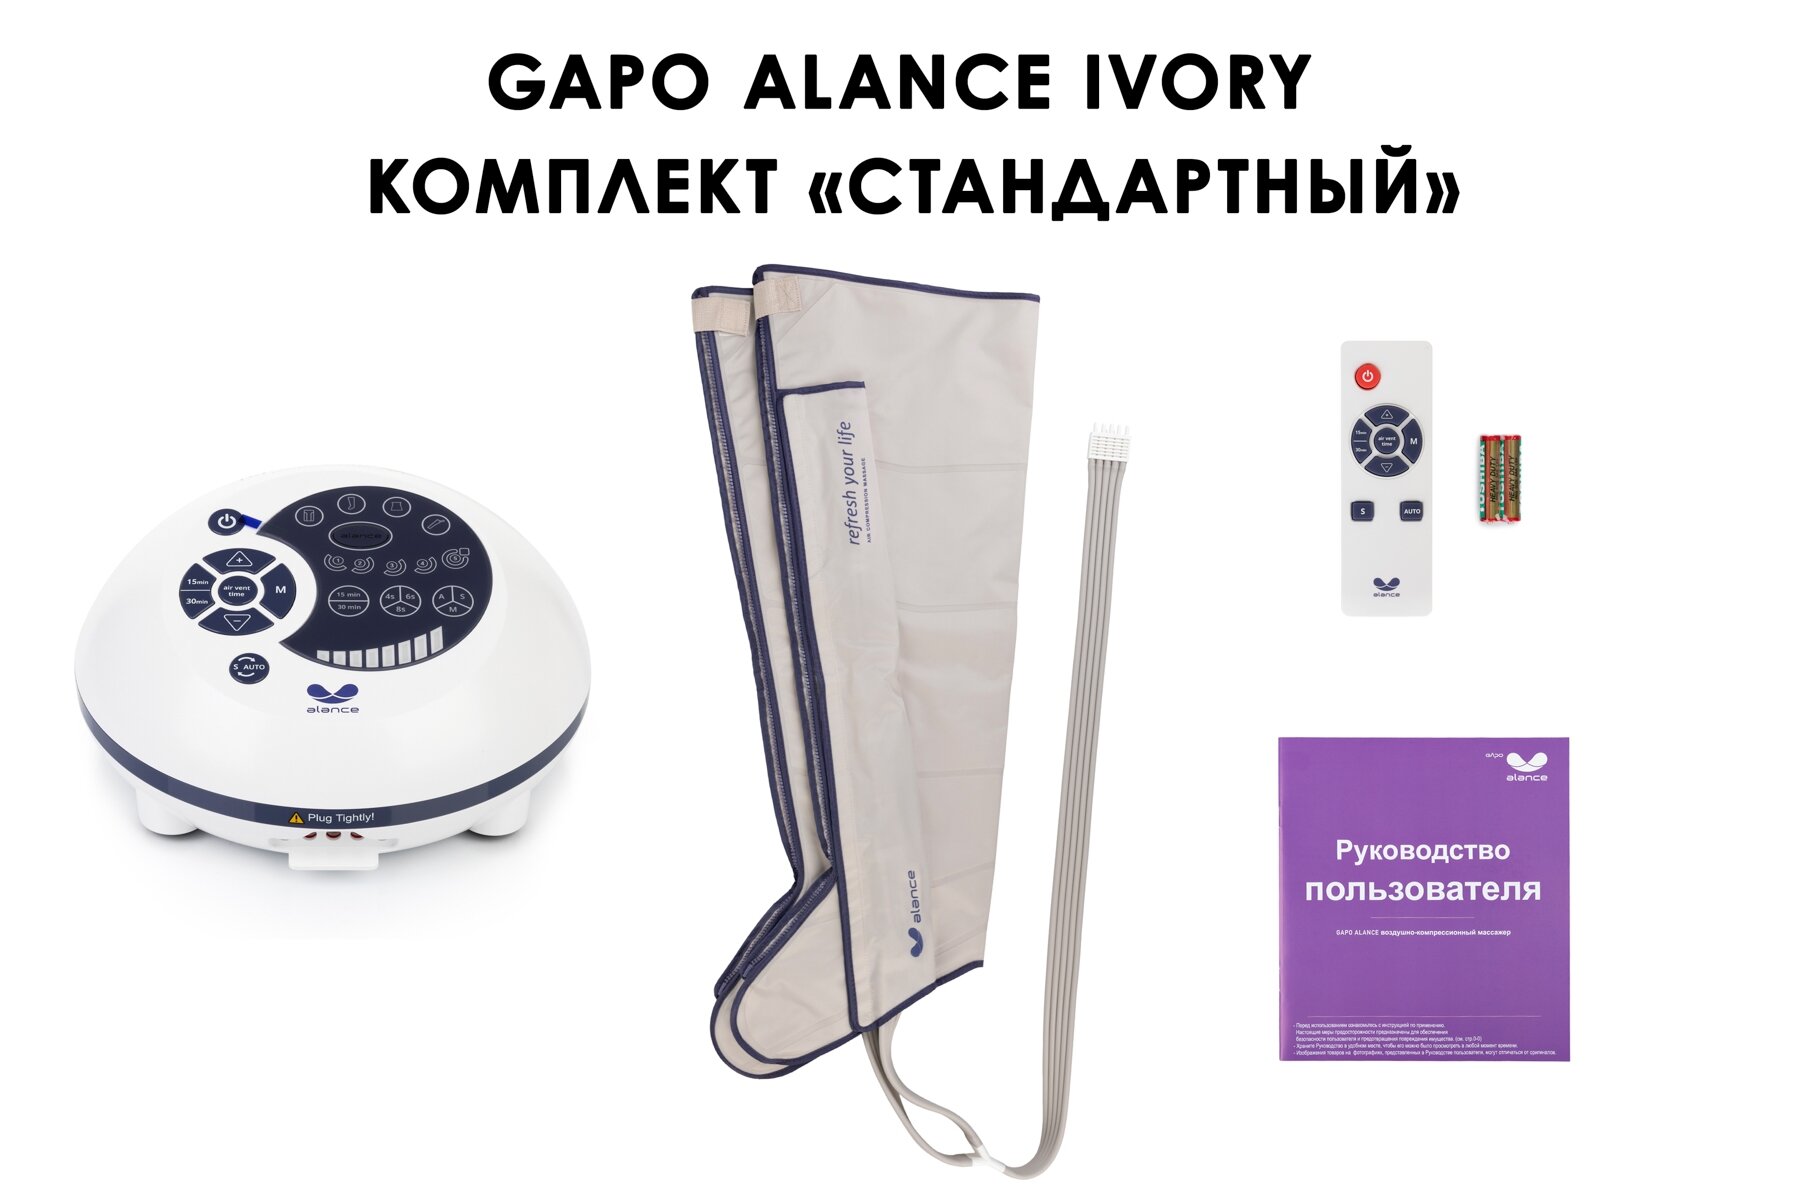 Аппарат для массажа и прессотерапии Gapo Alance Ivory, комплект «Стандарт» XXL